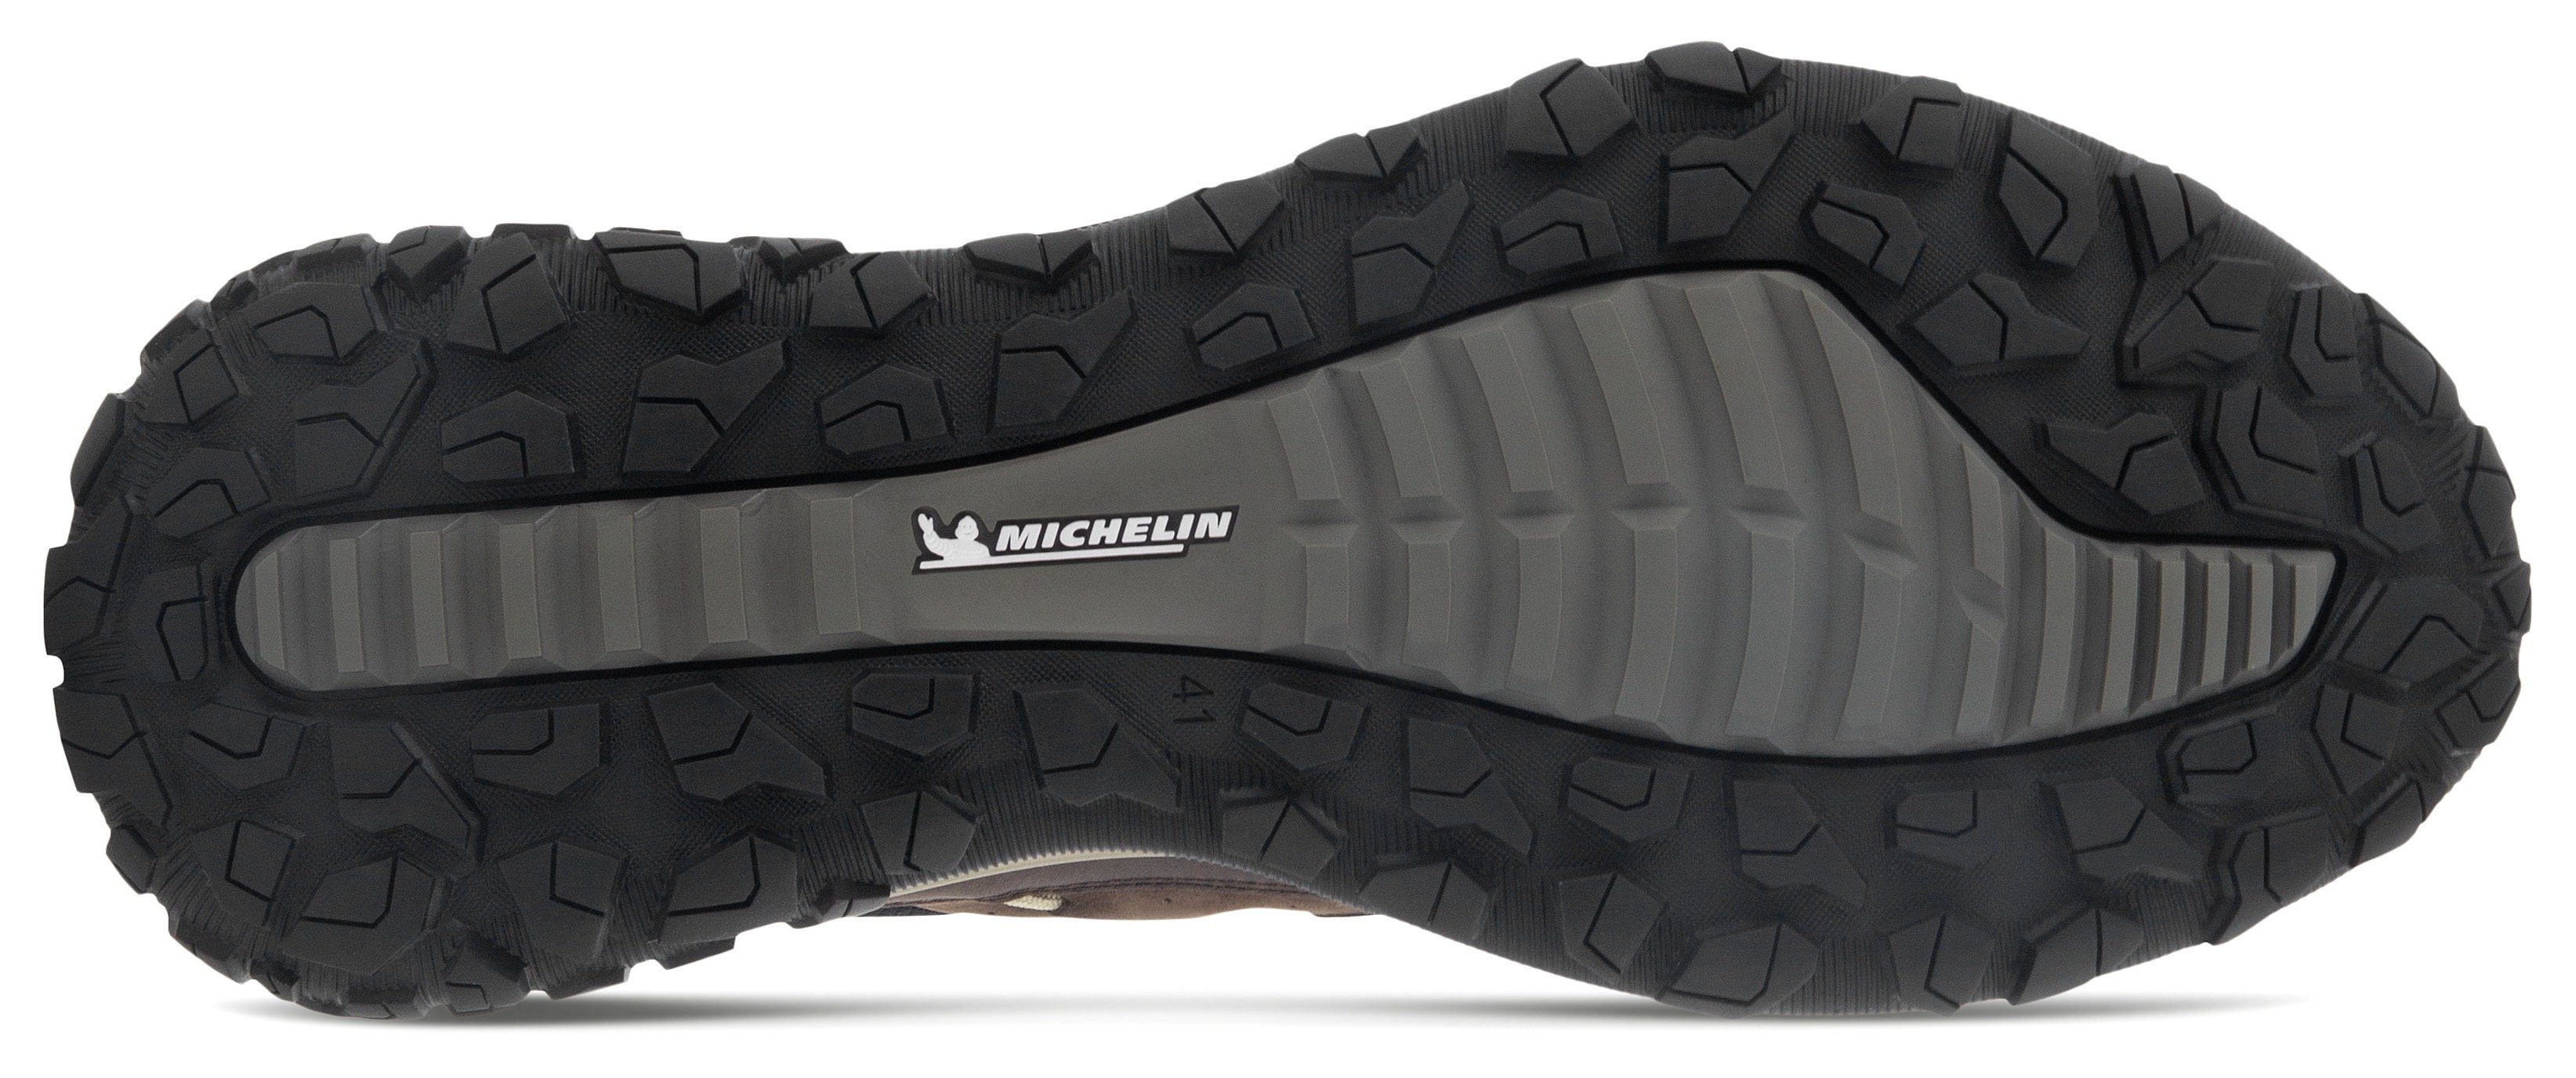 profilierter Ecco dunkelbraun mit Sneaker Michelin-Laufsohle ULT-TRN M